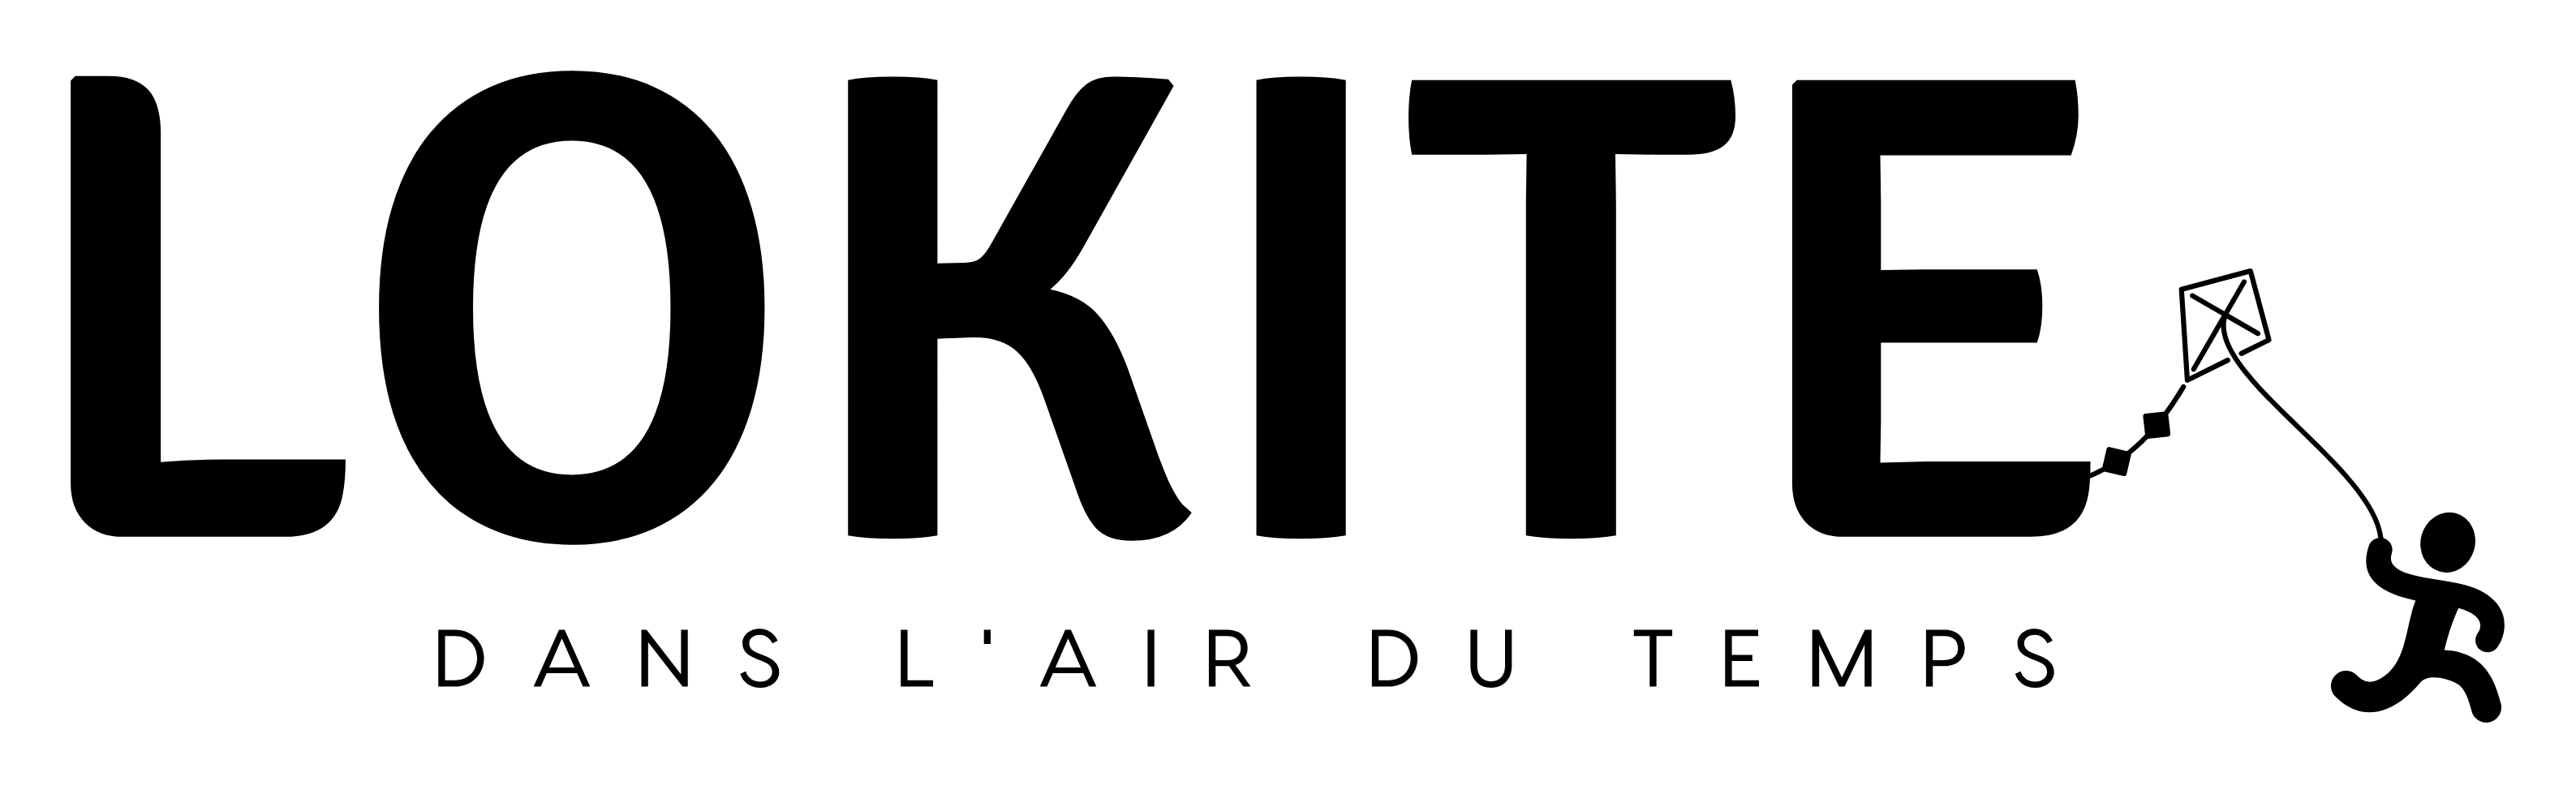 Logo Lokite Noir